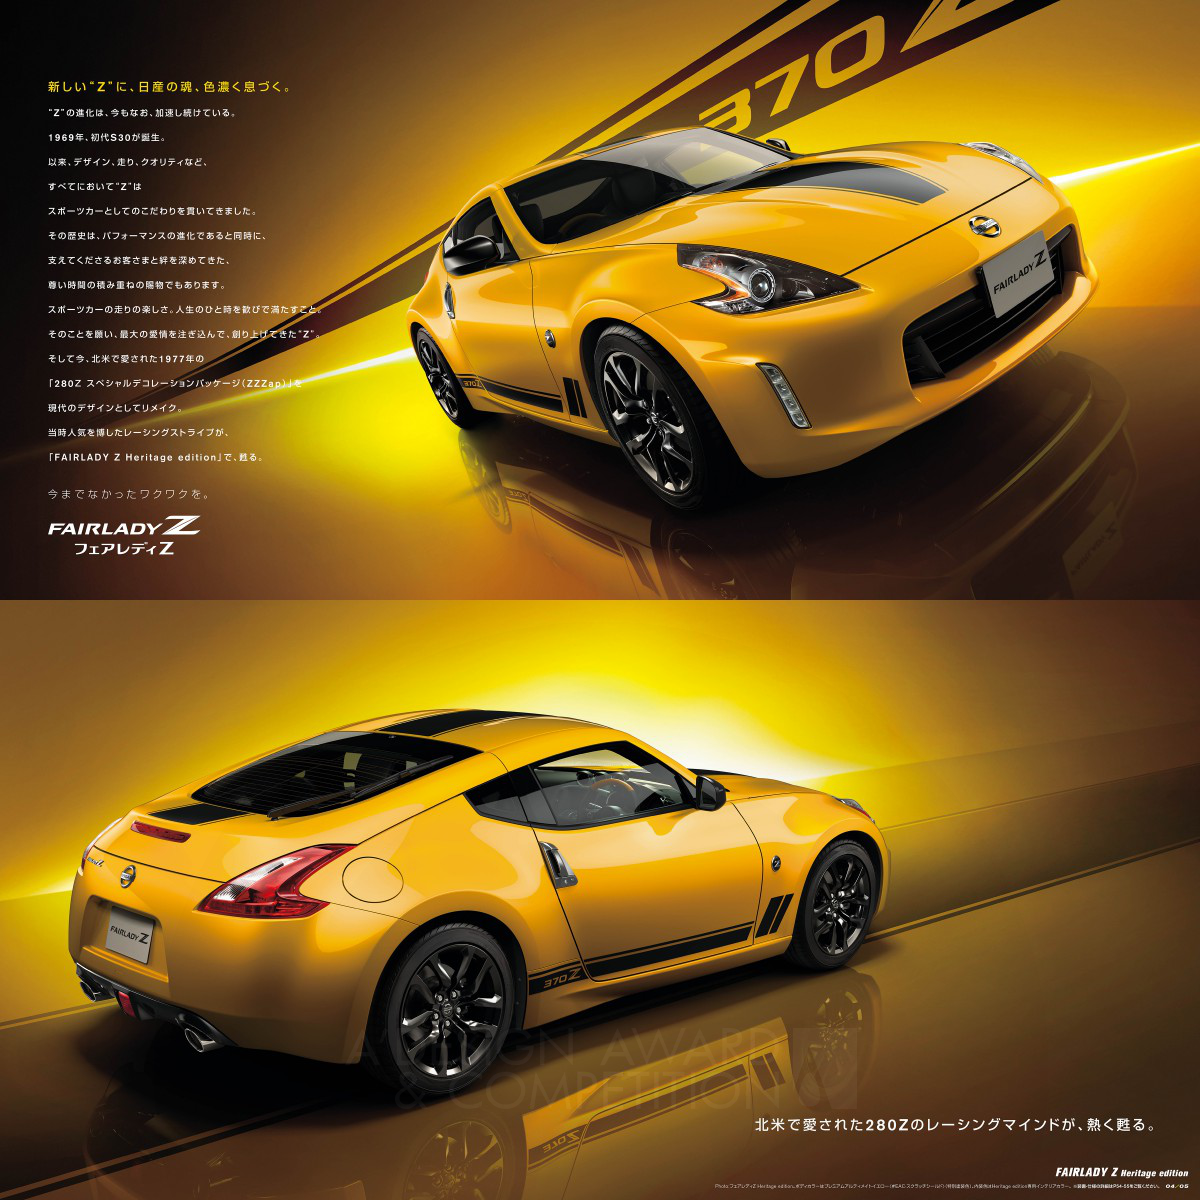 Nissan Fairlady Z Brochure by Tomohira Kodama Platinum Advertising, Marketing and Communication Design Award Winner 2019 